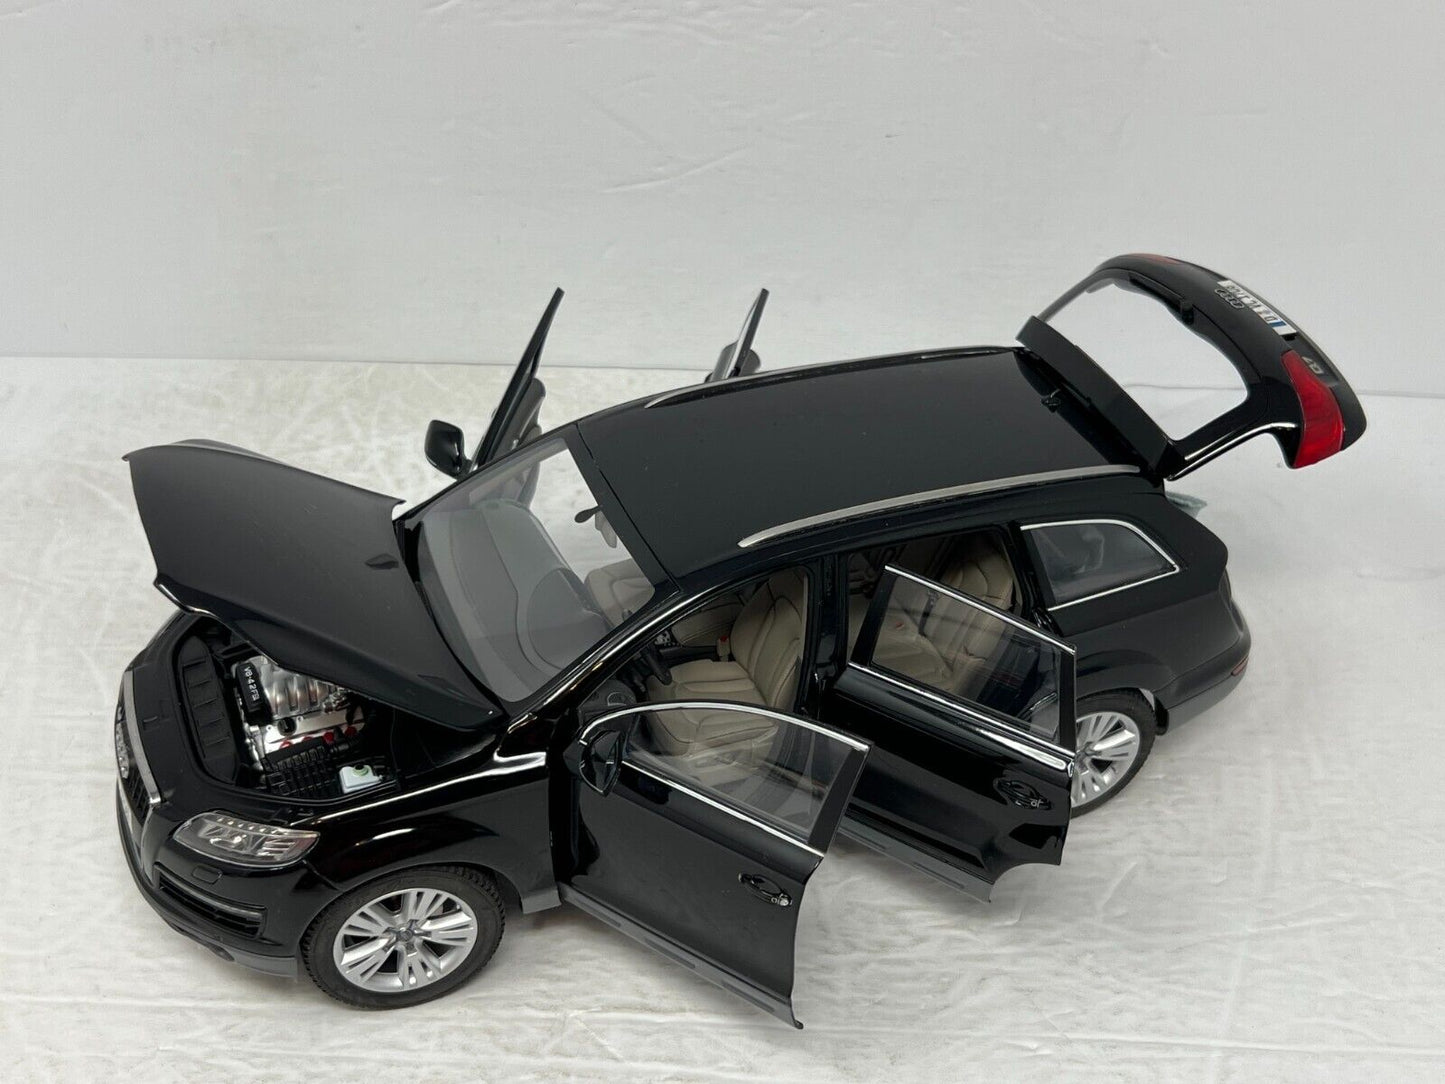 Kyosho Audi Q7 Facelift Night Black 1:18 Diecast